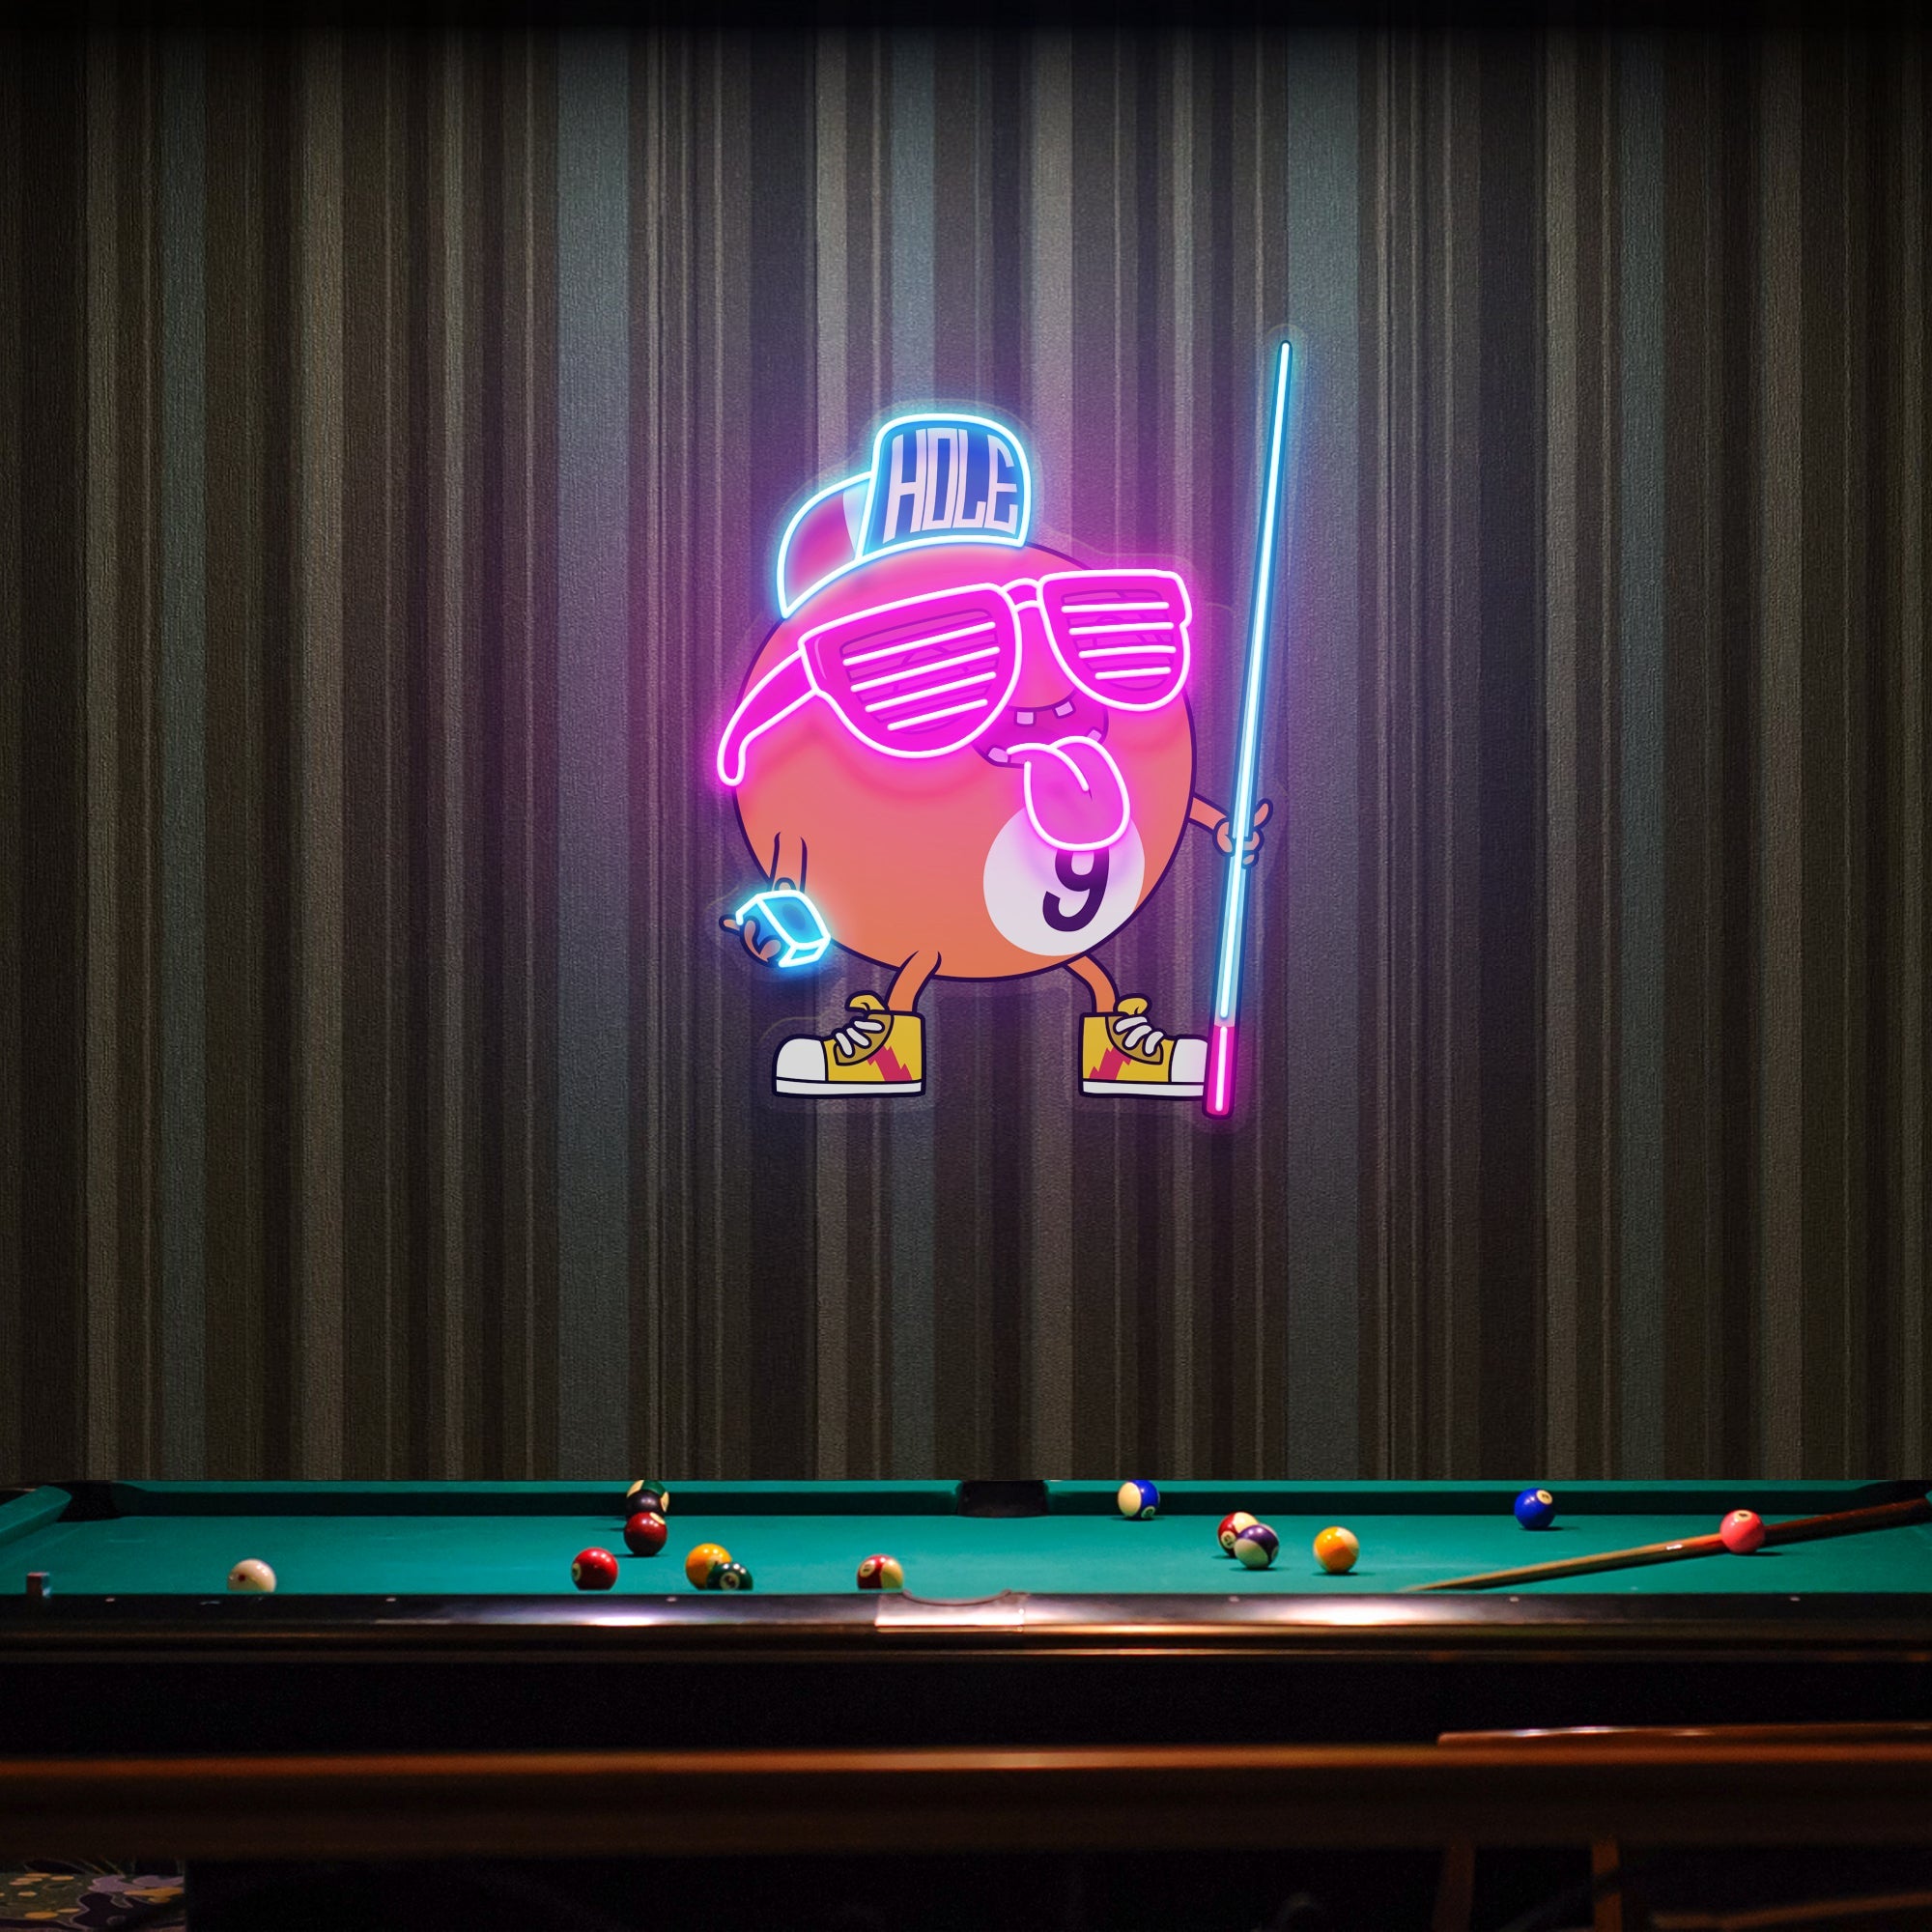 Billiards Room Decor, Gift For Pool Player Artwork Led Neon Sign Light - Neonbir